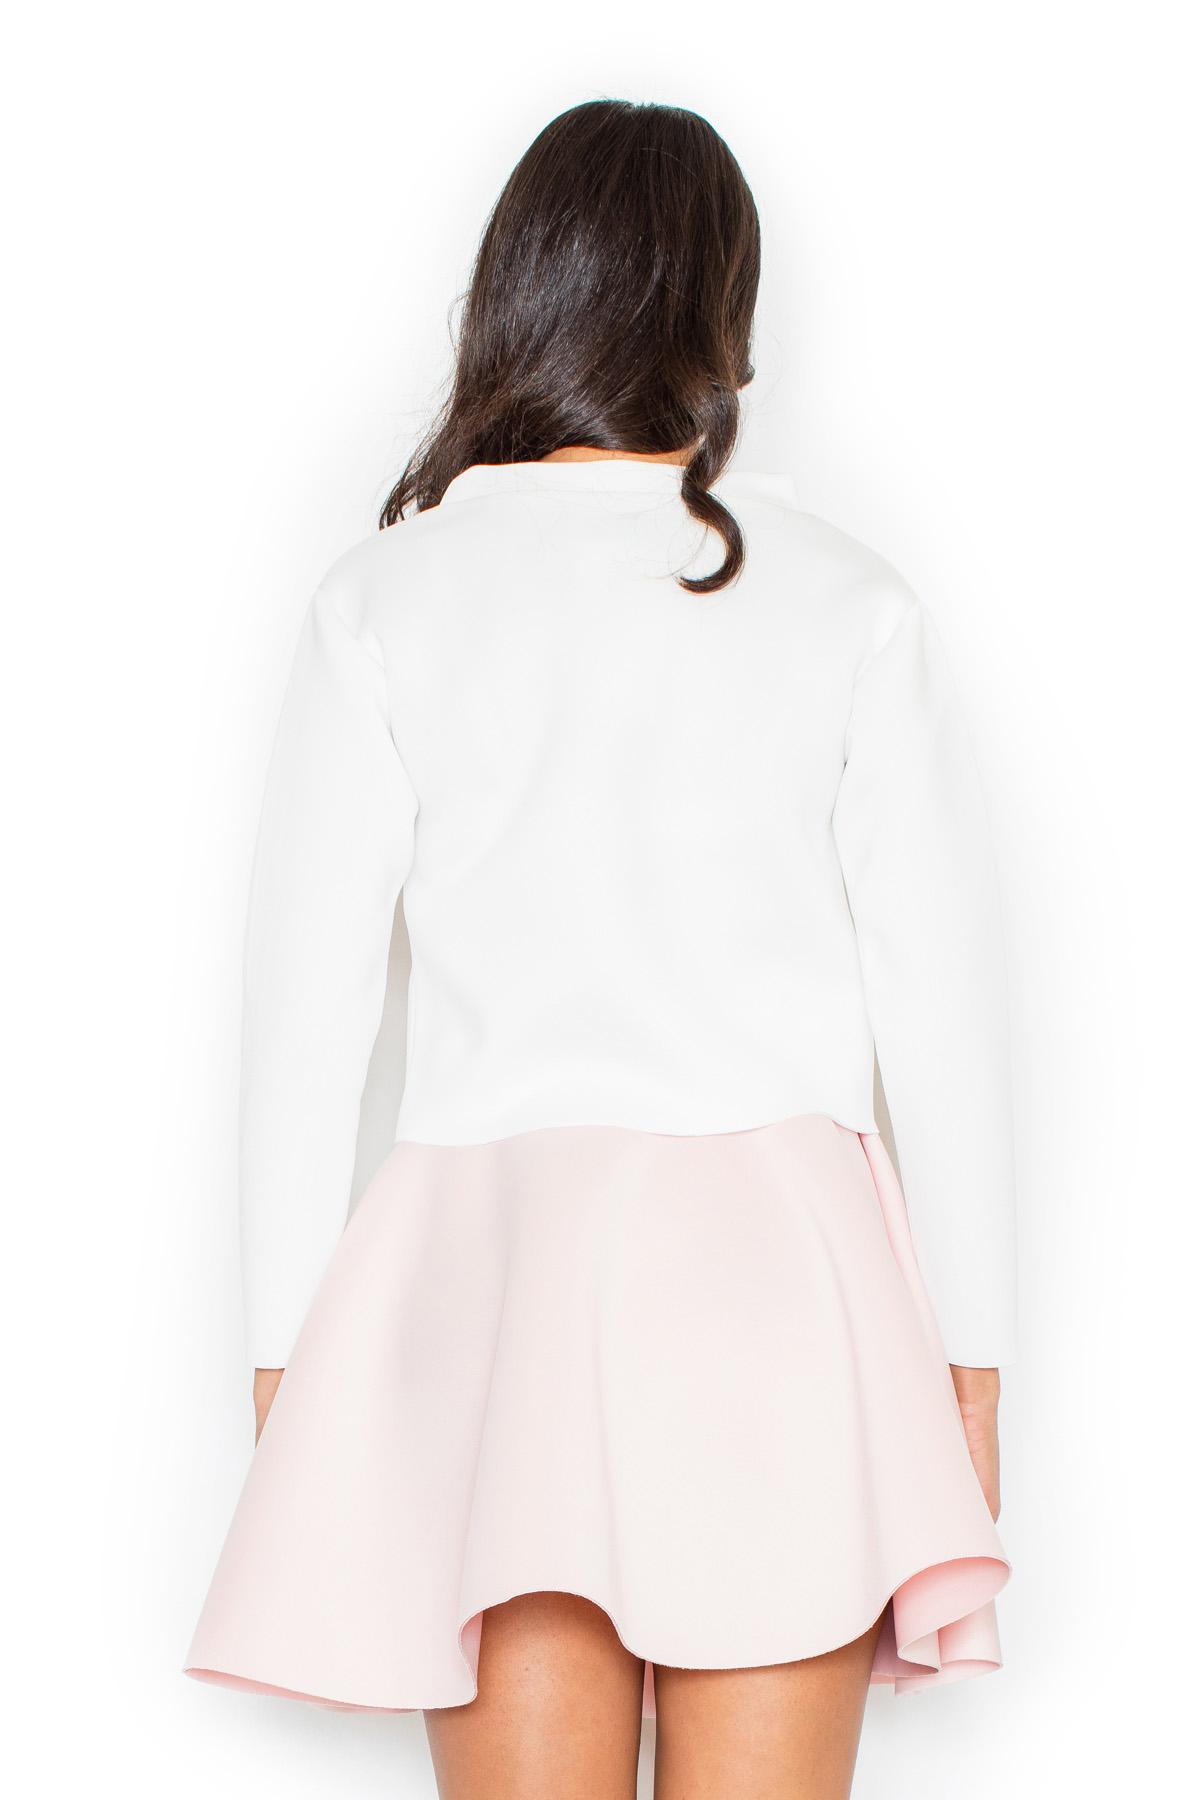  Skirt model 44183 Figl  pink